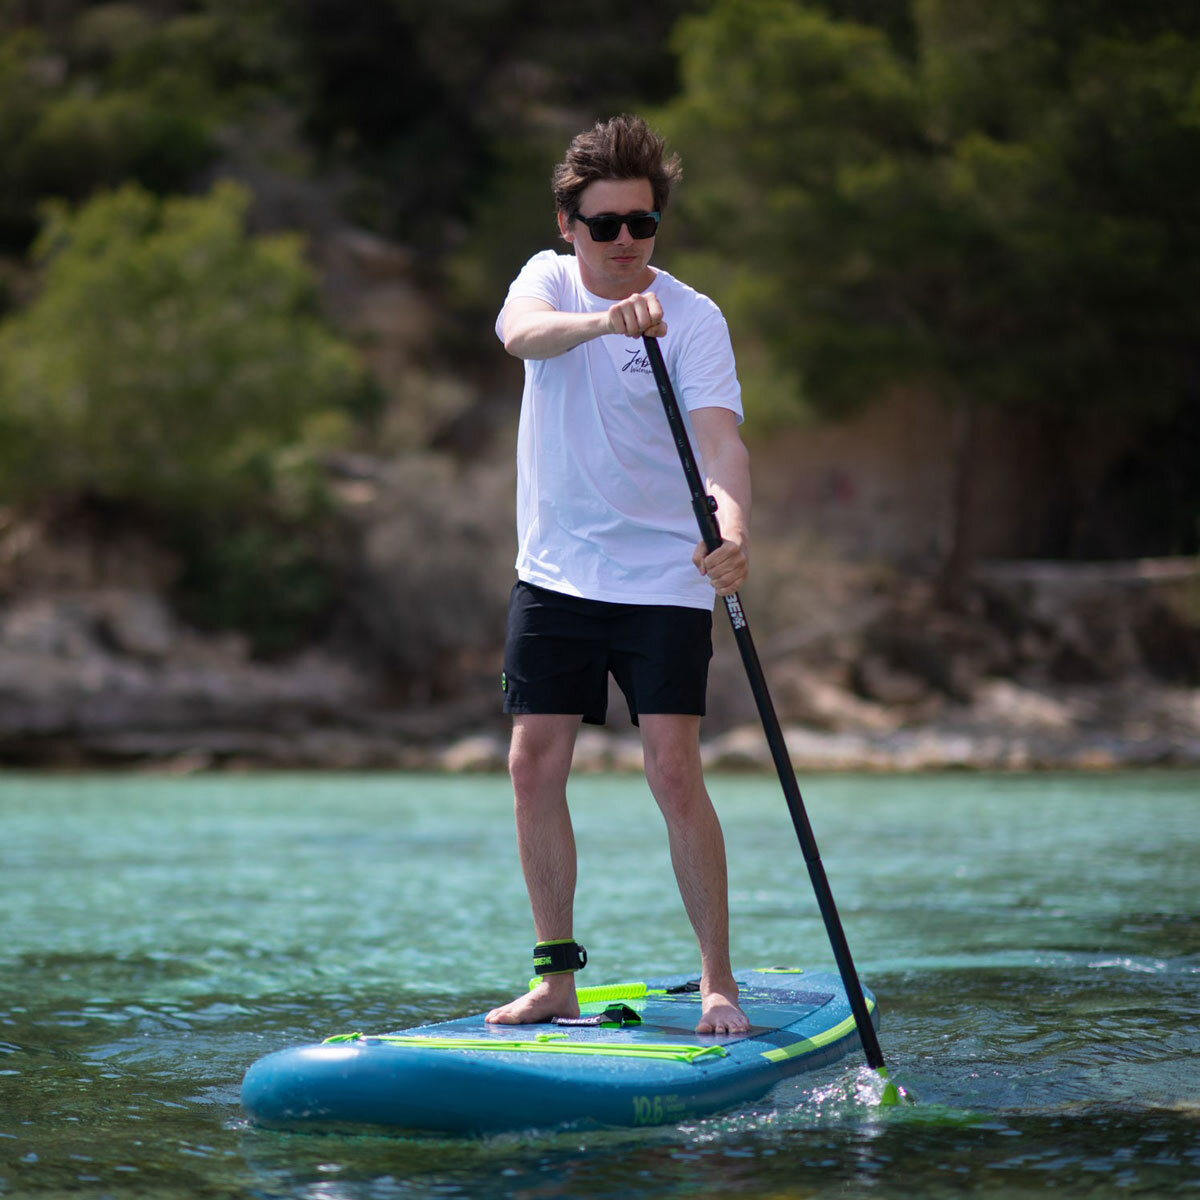 Buy Jobe Leona Inflatable Paddleboard Package